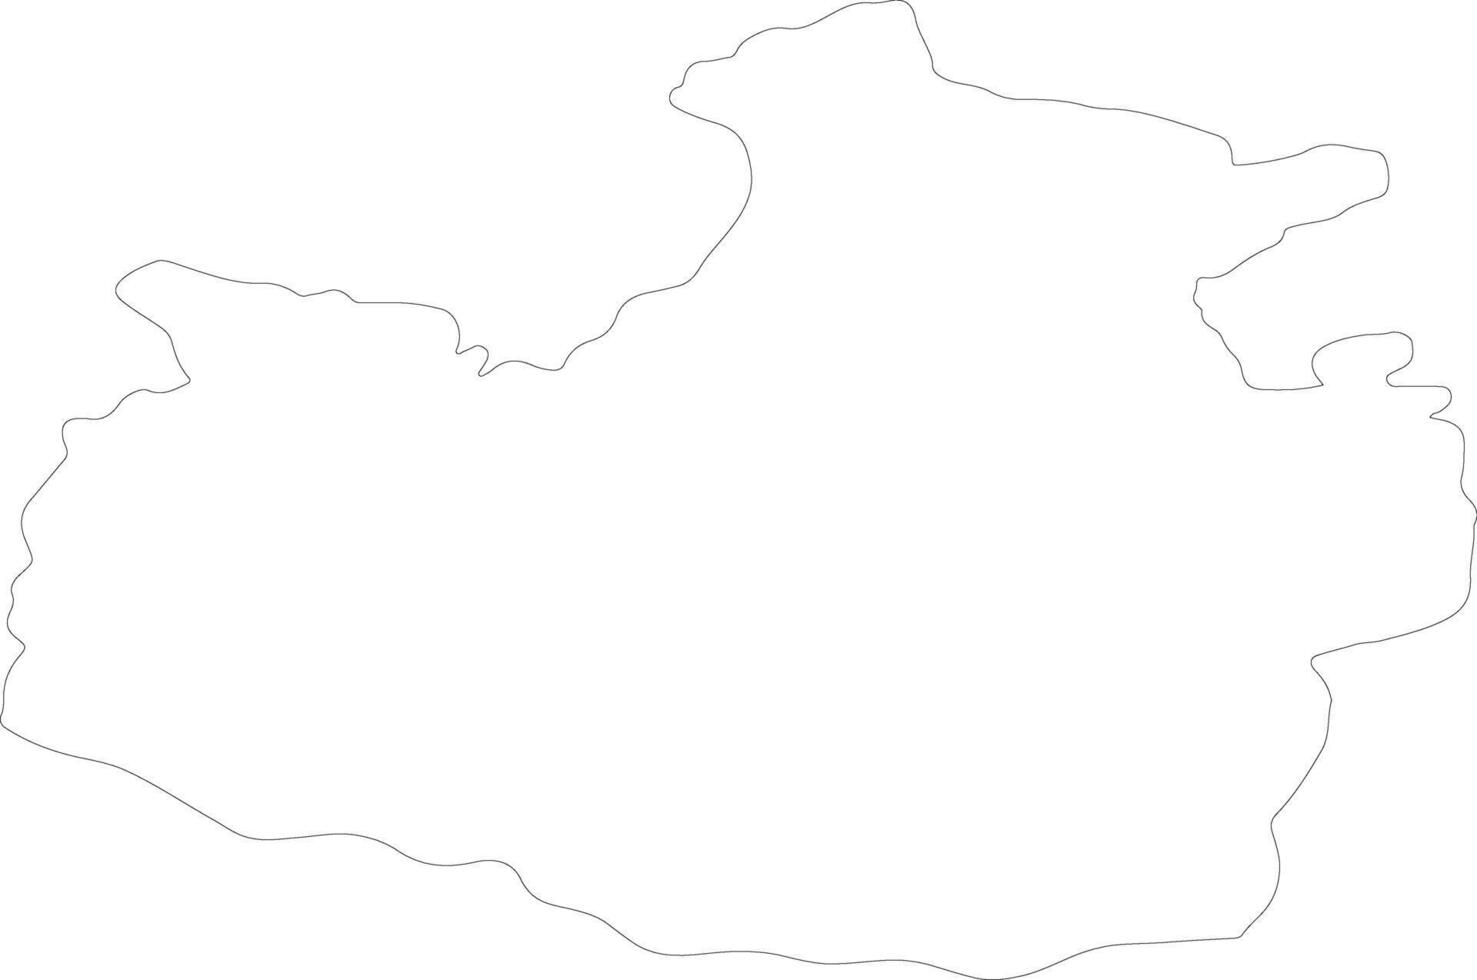 Karachay-Cherkess Russia outline map vector